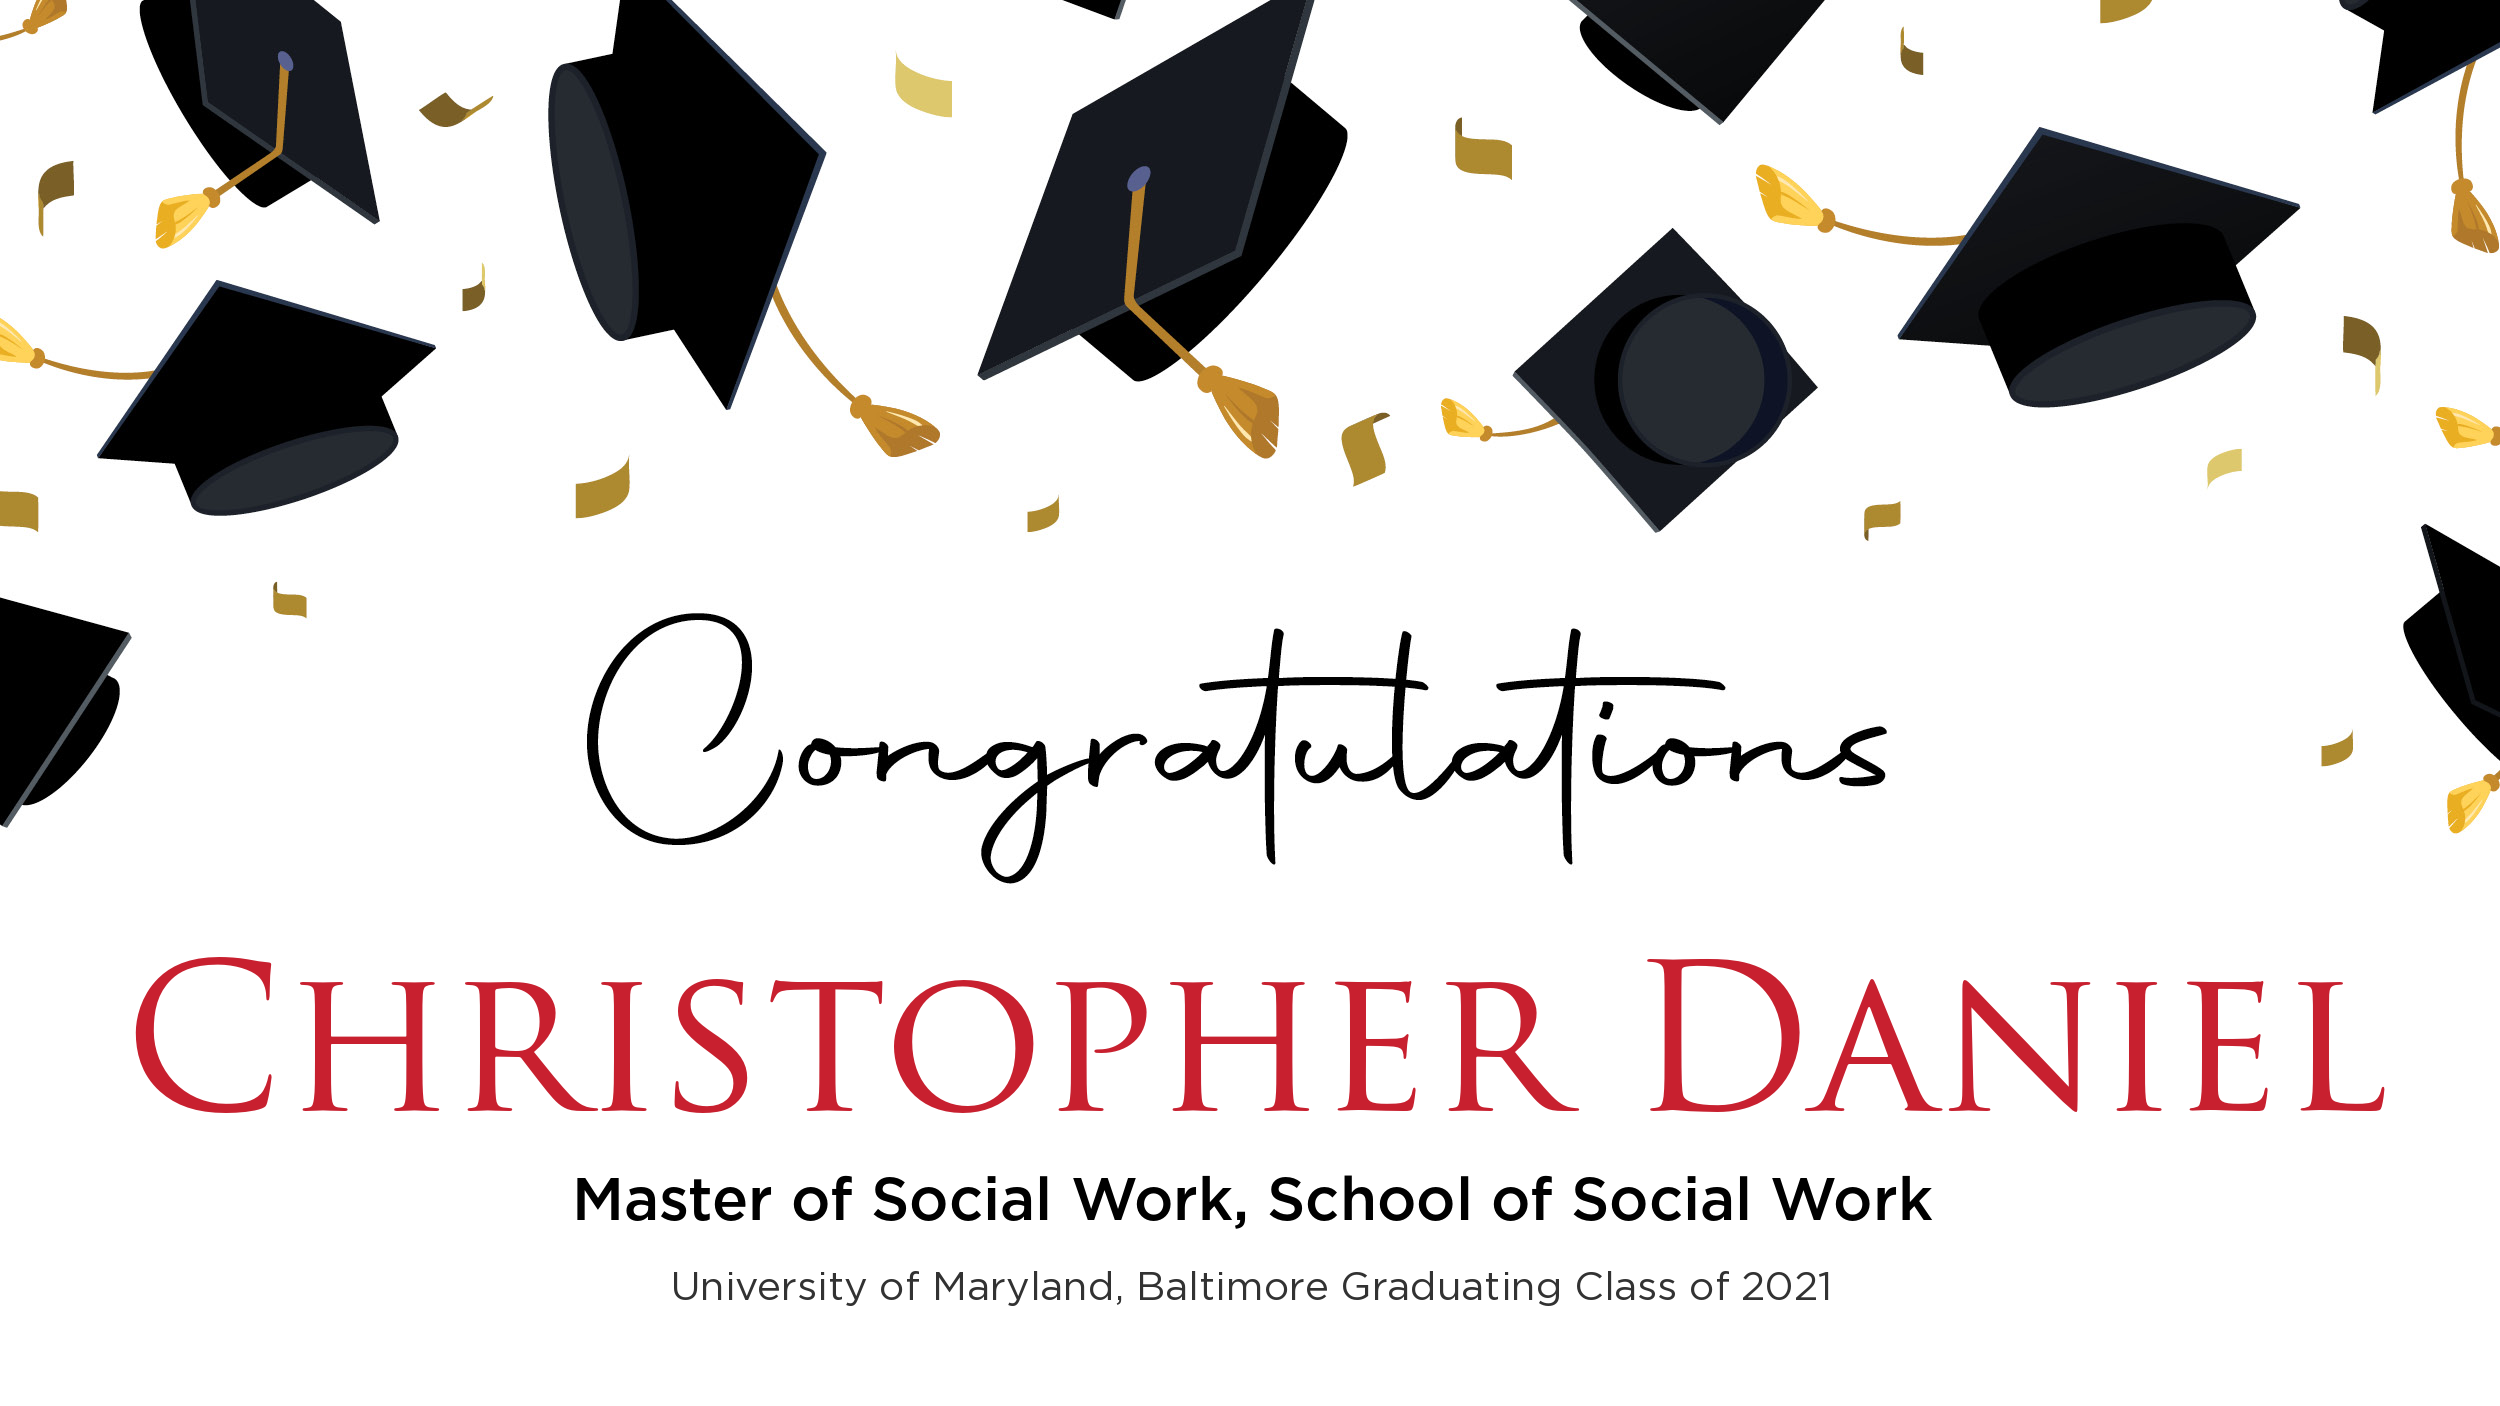 Congratulations Christopher Daniel, Master of Social Work